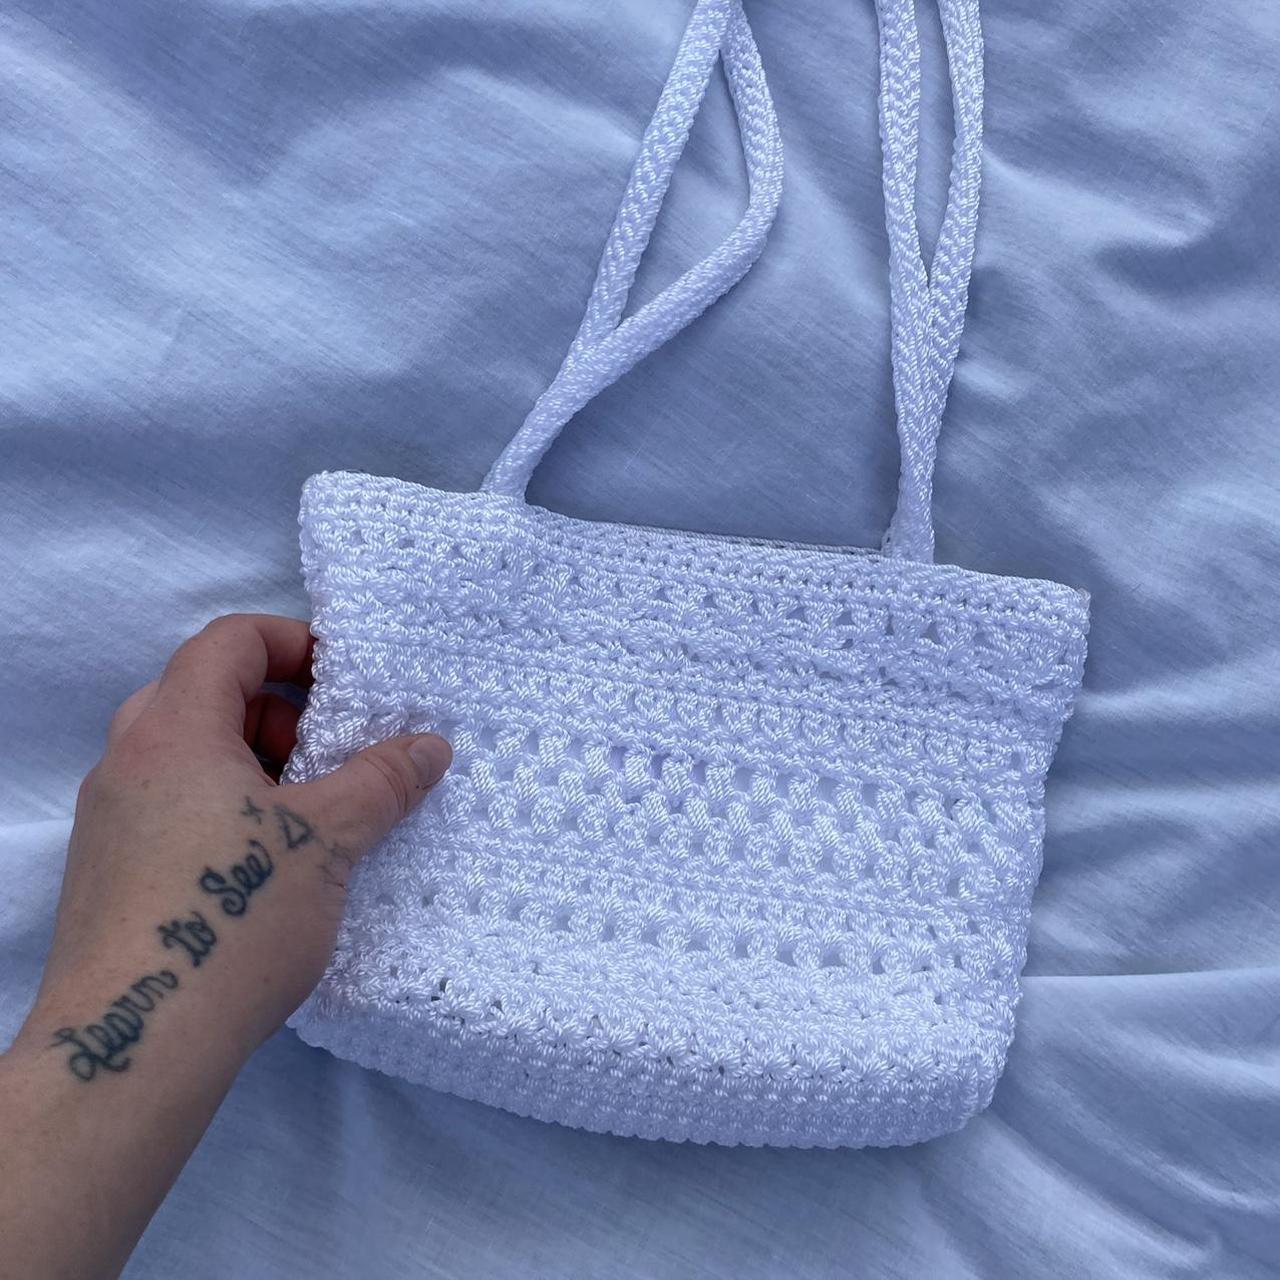 Product Image 4 - White woven handbag

Brand: Lina

Era: 2000s

Style/aesthetic: